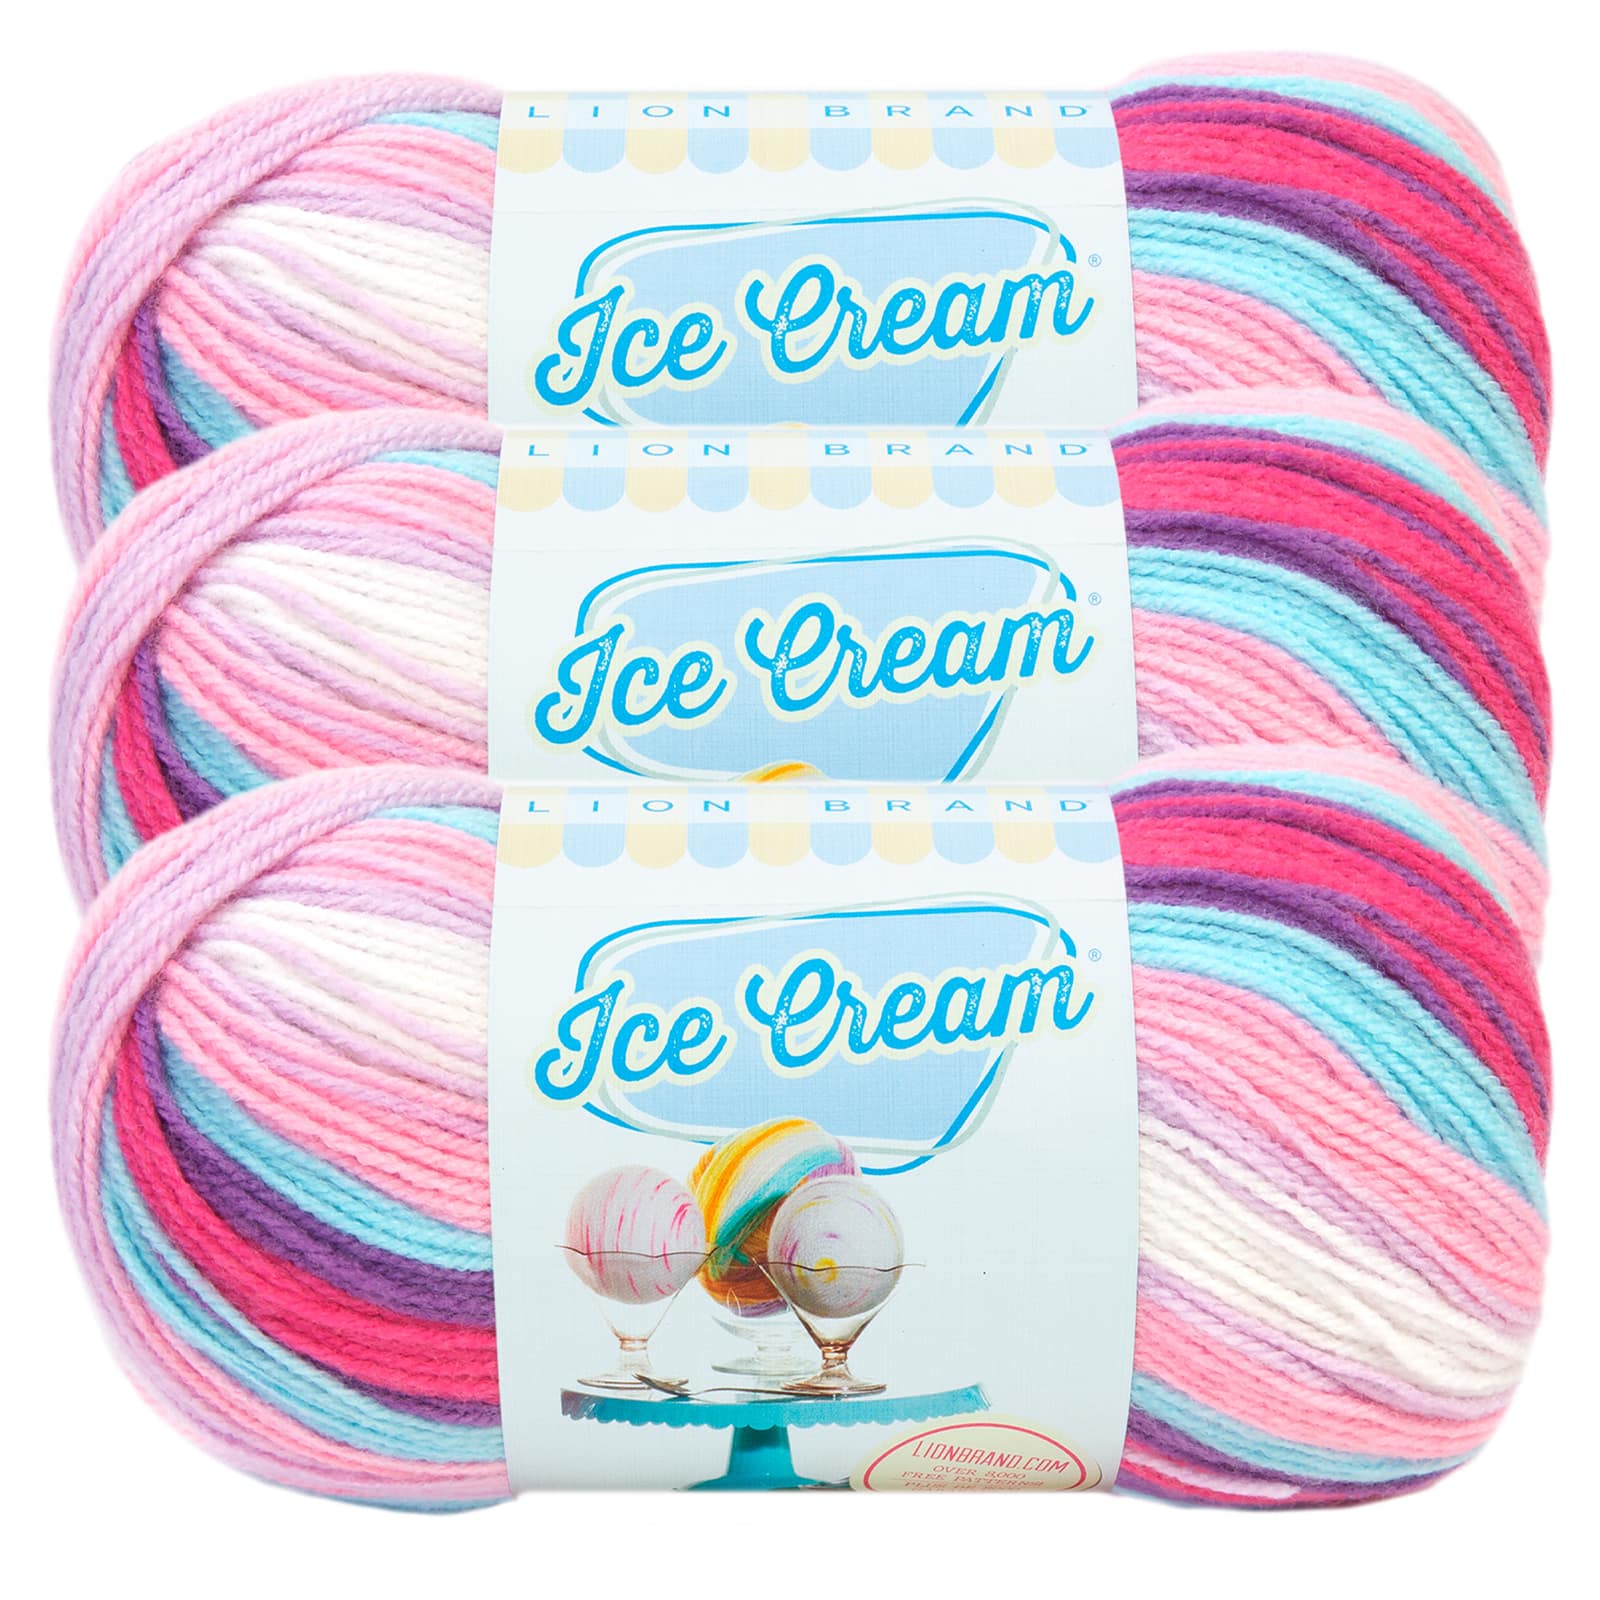 Lion Brand Yarn Ice Cream Bunny Tracks Light Acrylic Multi-color Yarn 3 Pack